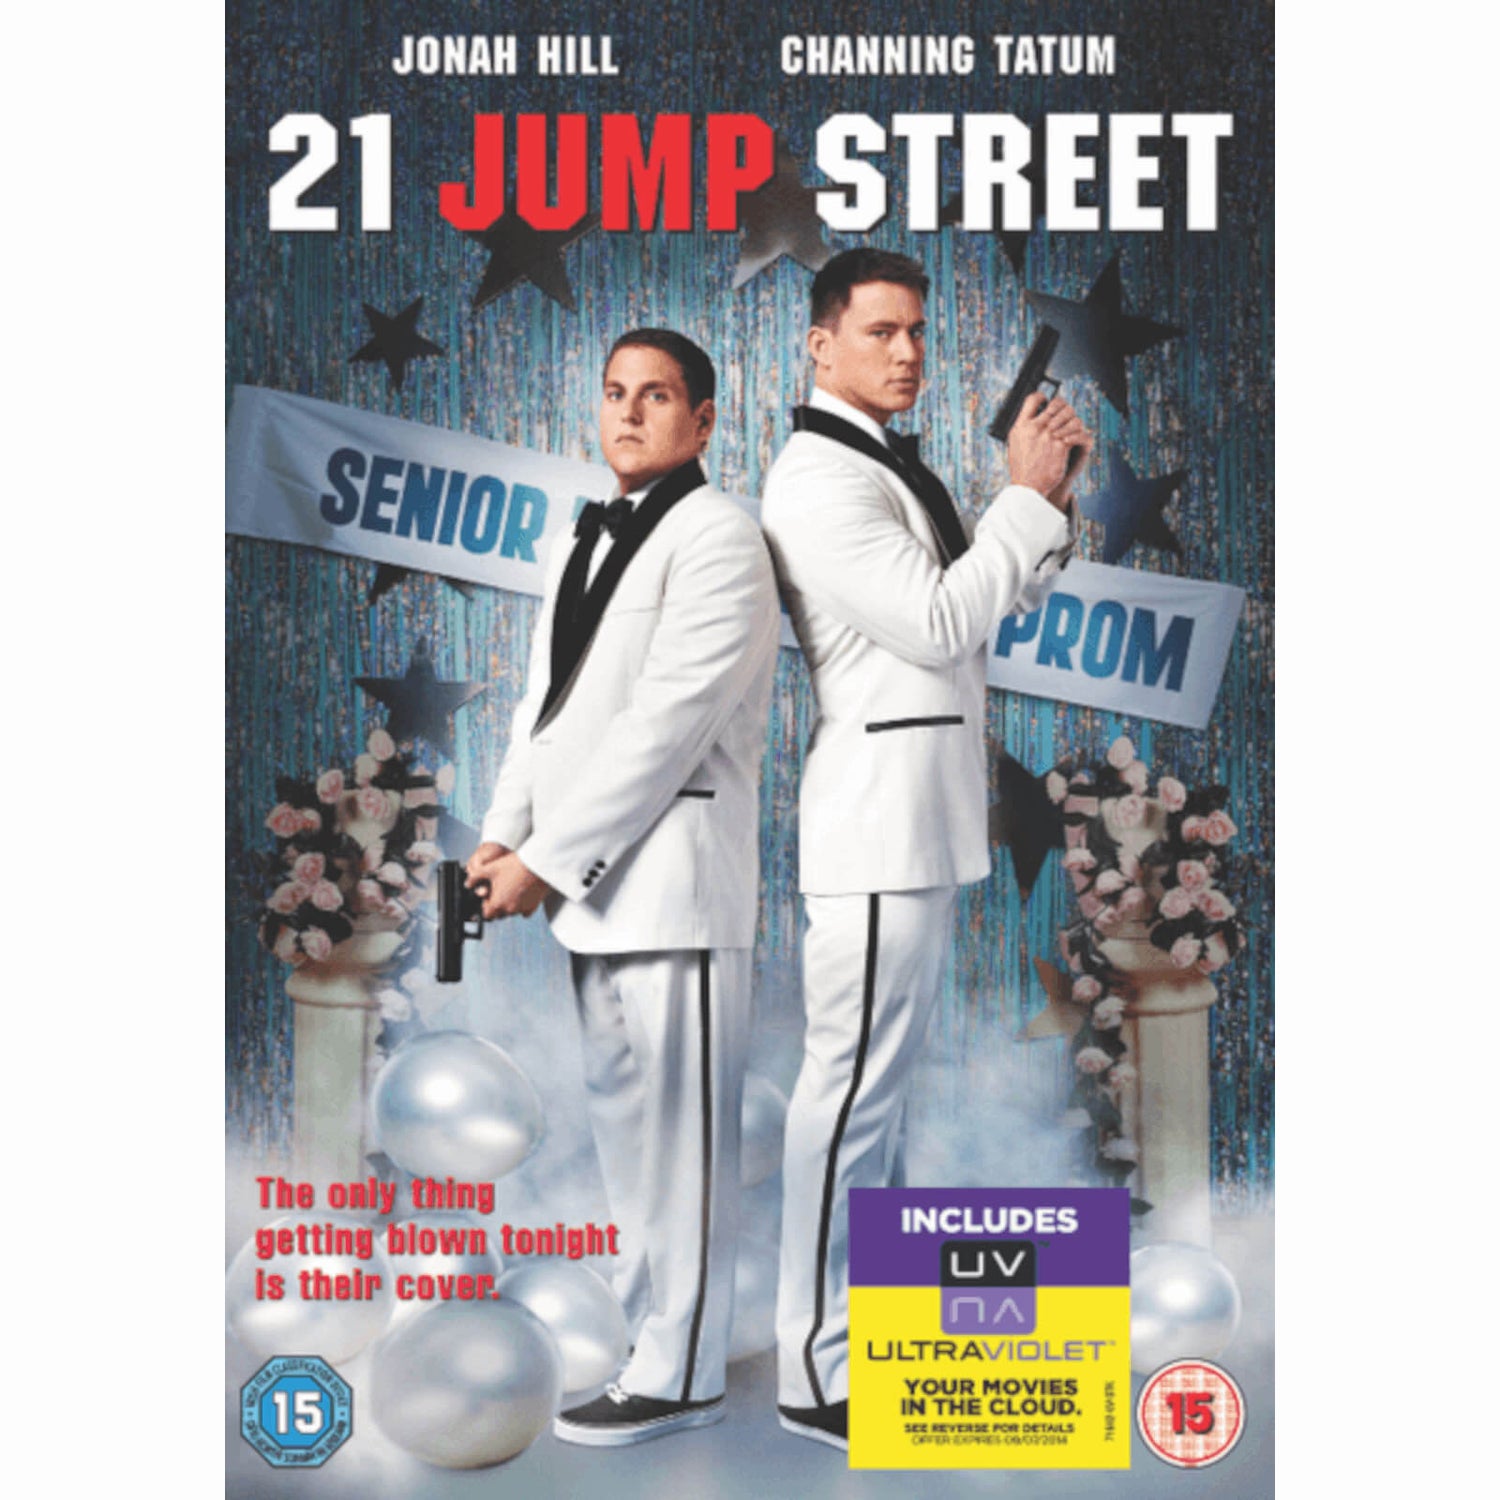 21 Jump Street (Includes UltraViolet Copy)